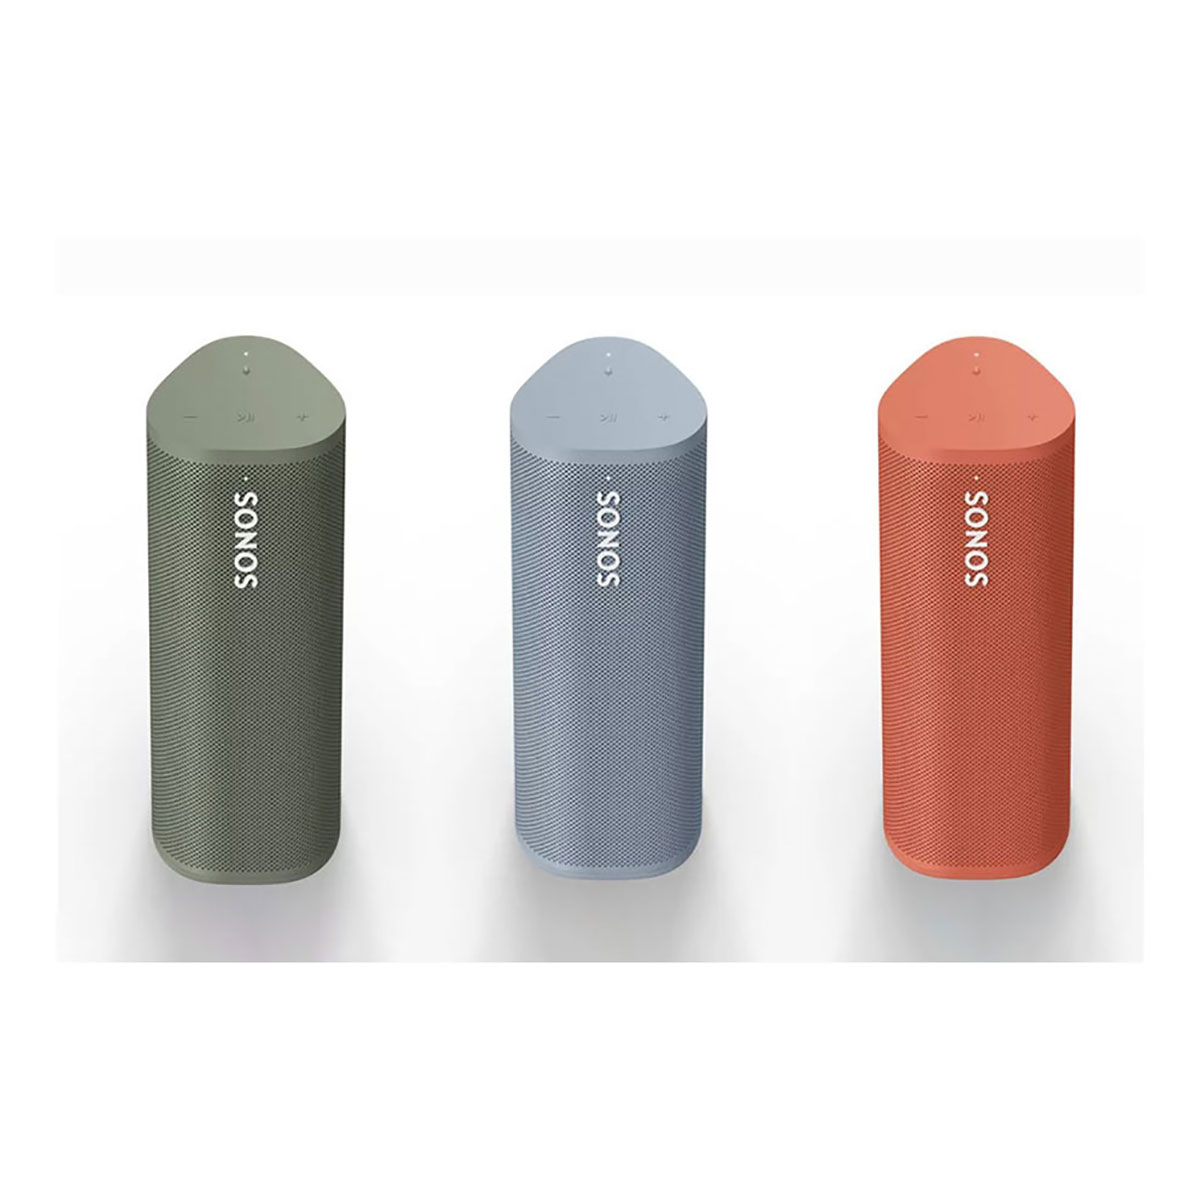 Sonos - Roam, Portable Smart Speaker, Wi-Fi, Bluetooth, Green